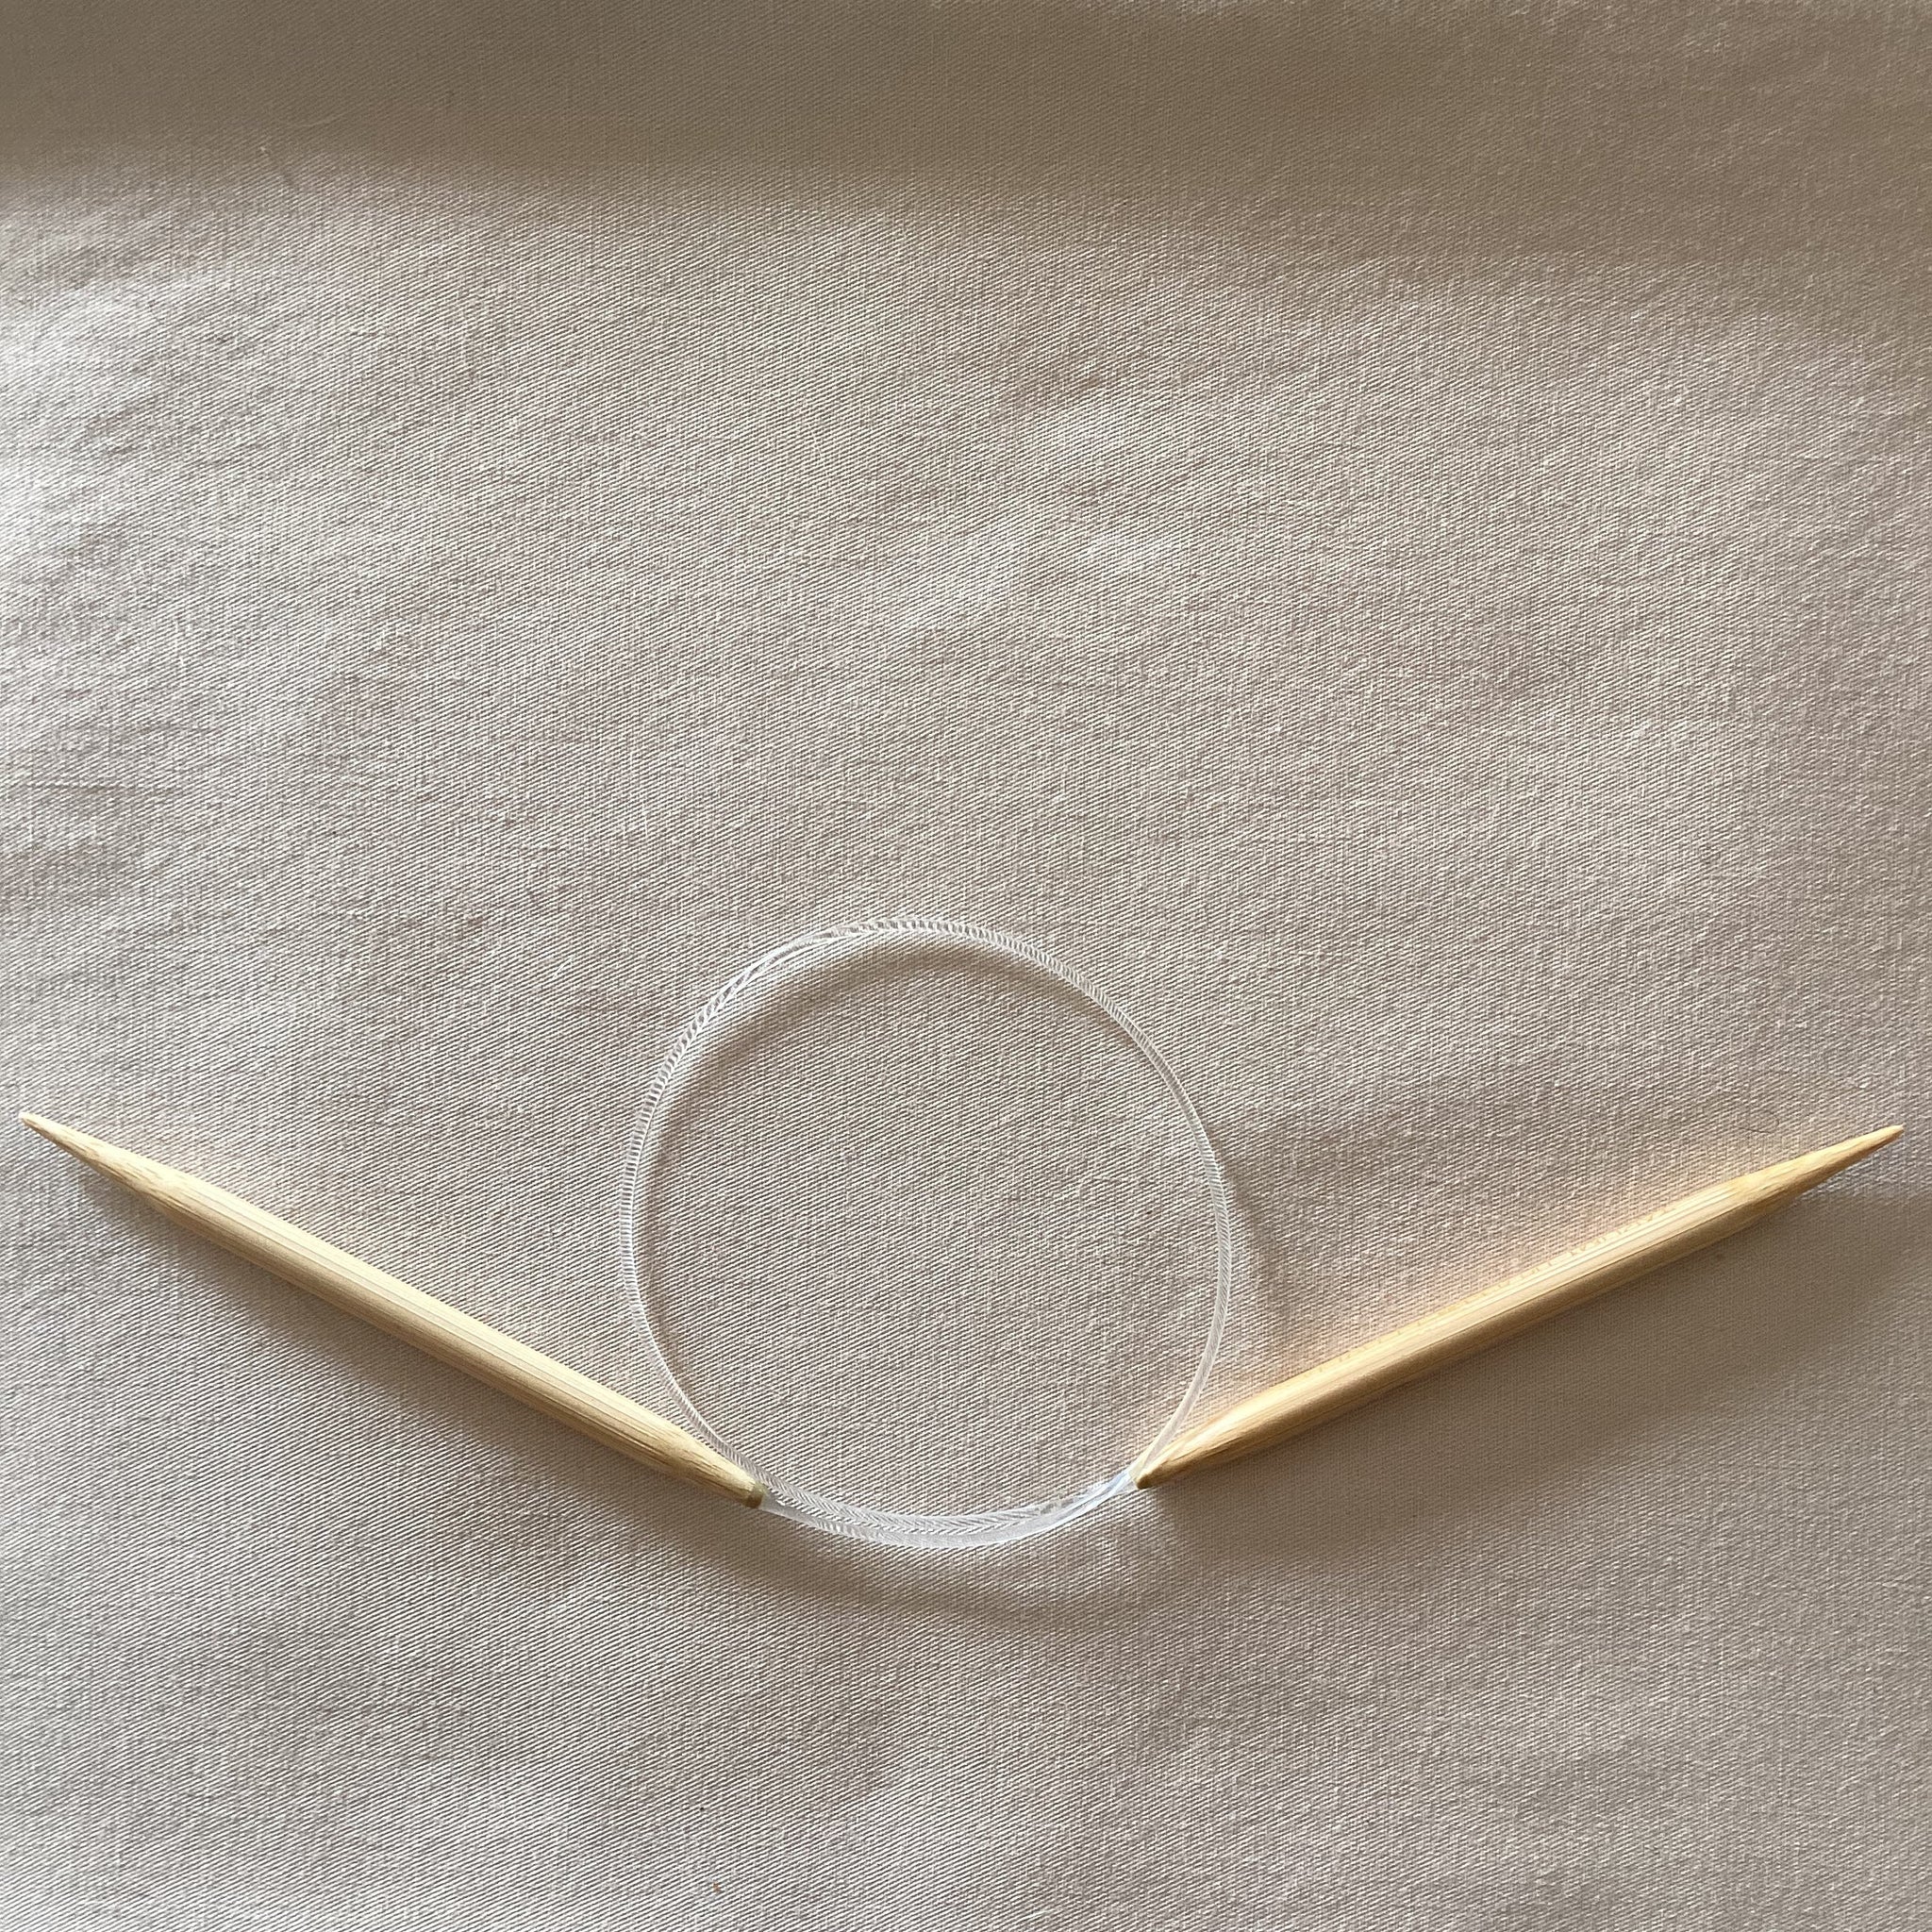 Clover Takumi Bamboo Circular 16-inch Knitting Needles, Size 6